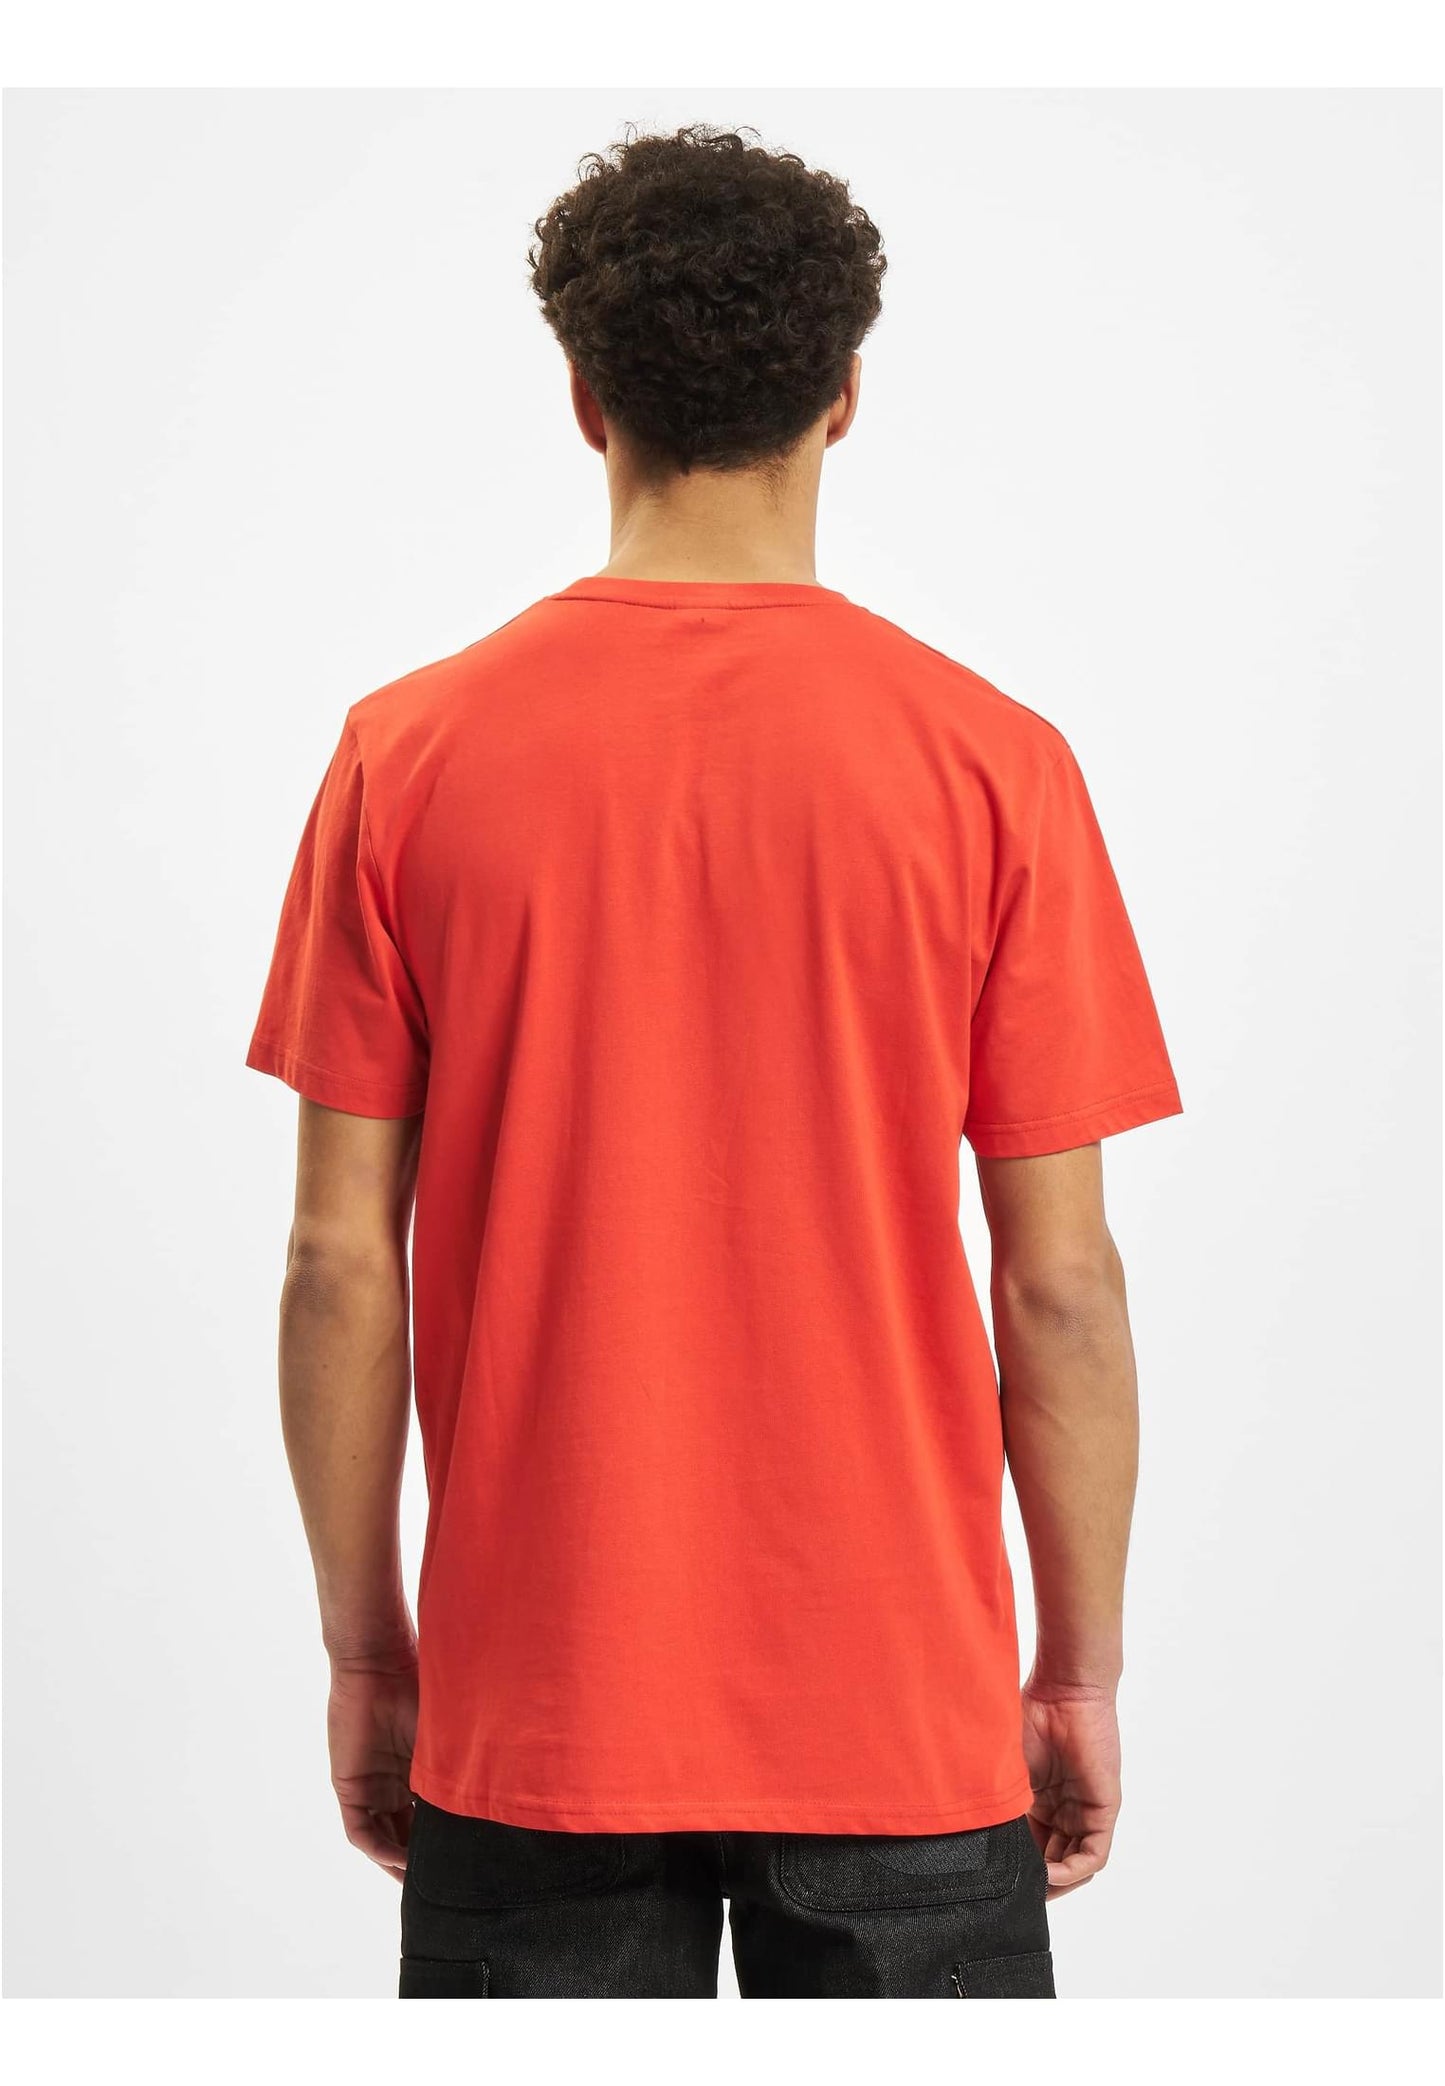 Ecko Unltd. Young T-Shirt red